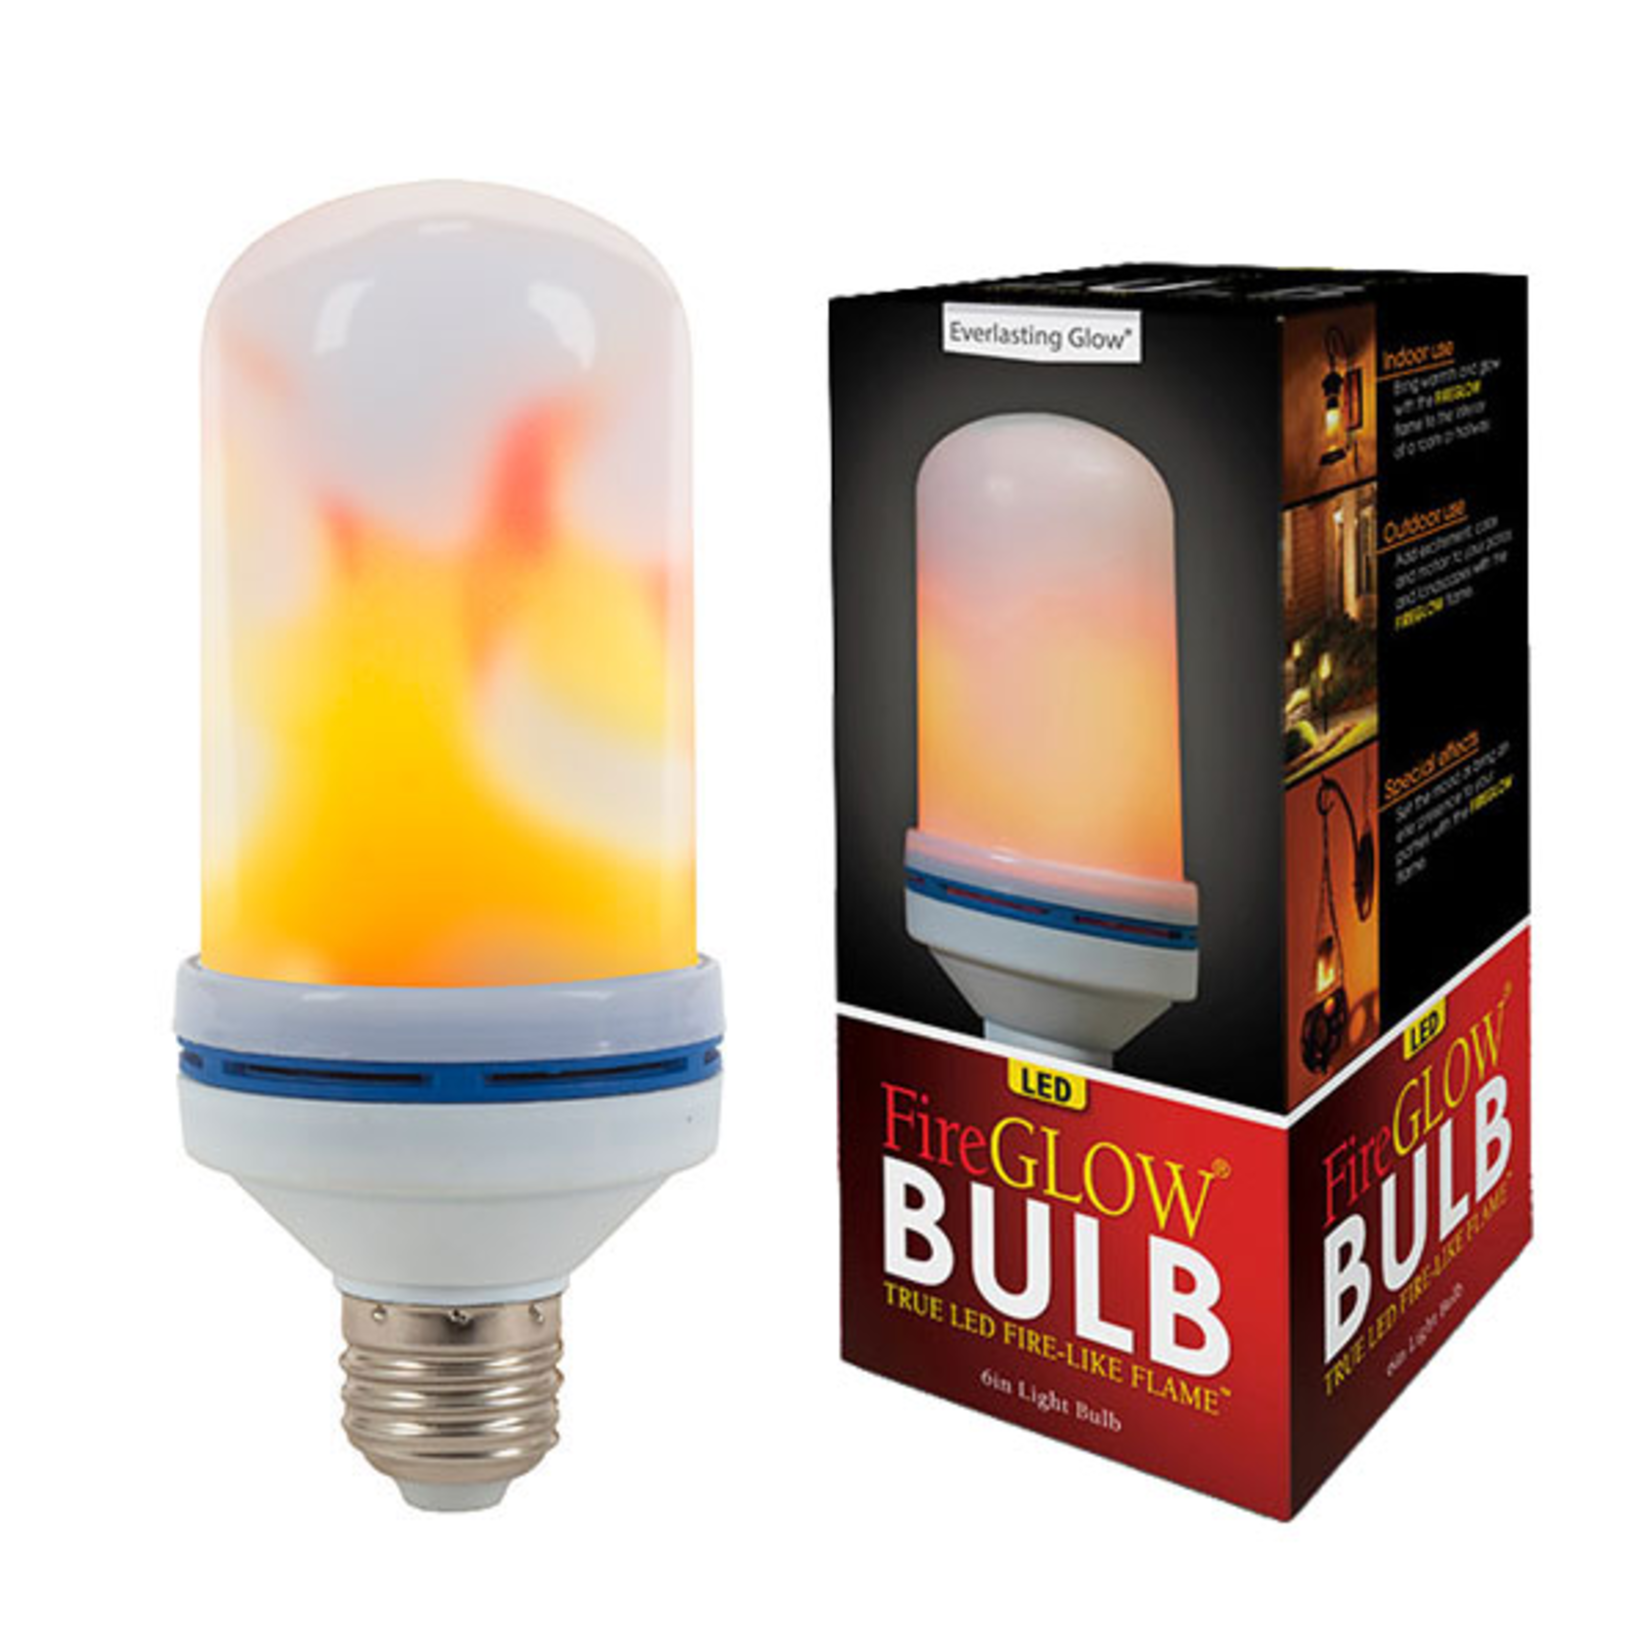 Everlasting Glow Fire Glow Multi-Function Bulb